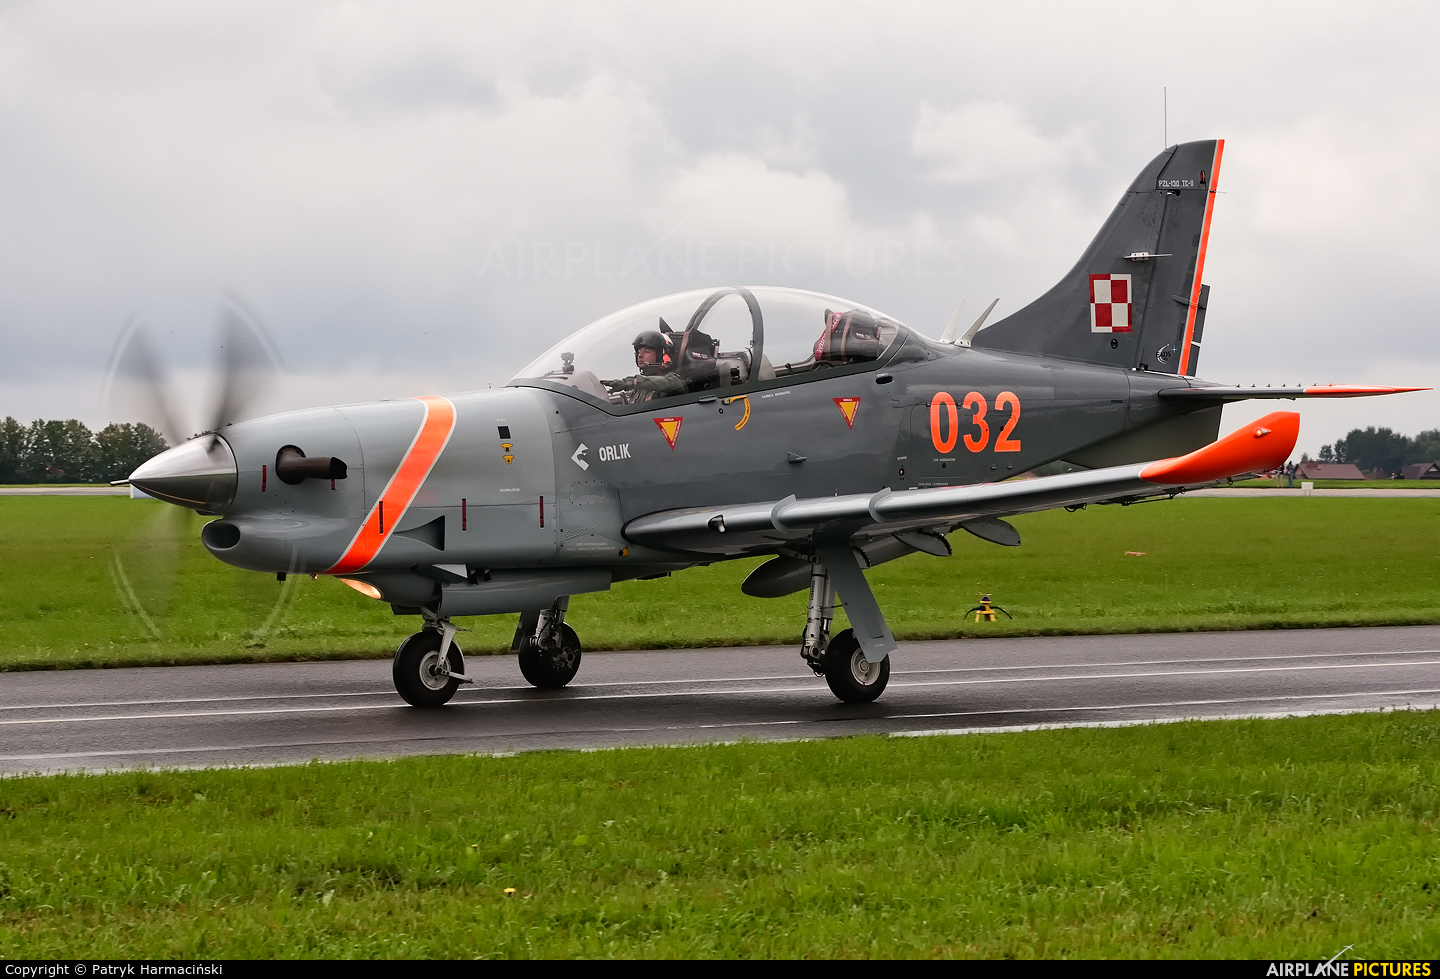 Poland - Air Force 032 aircraft at Radom - Sadków